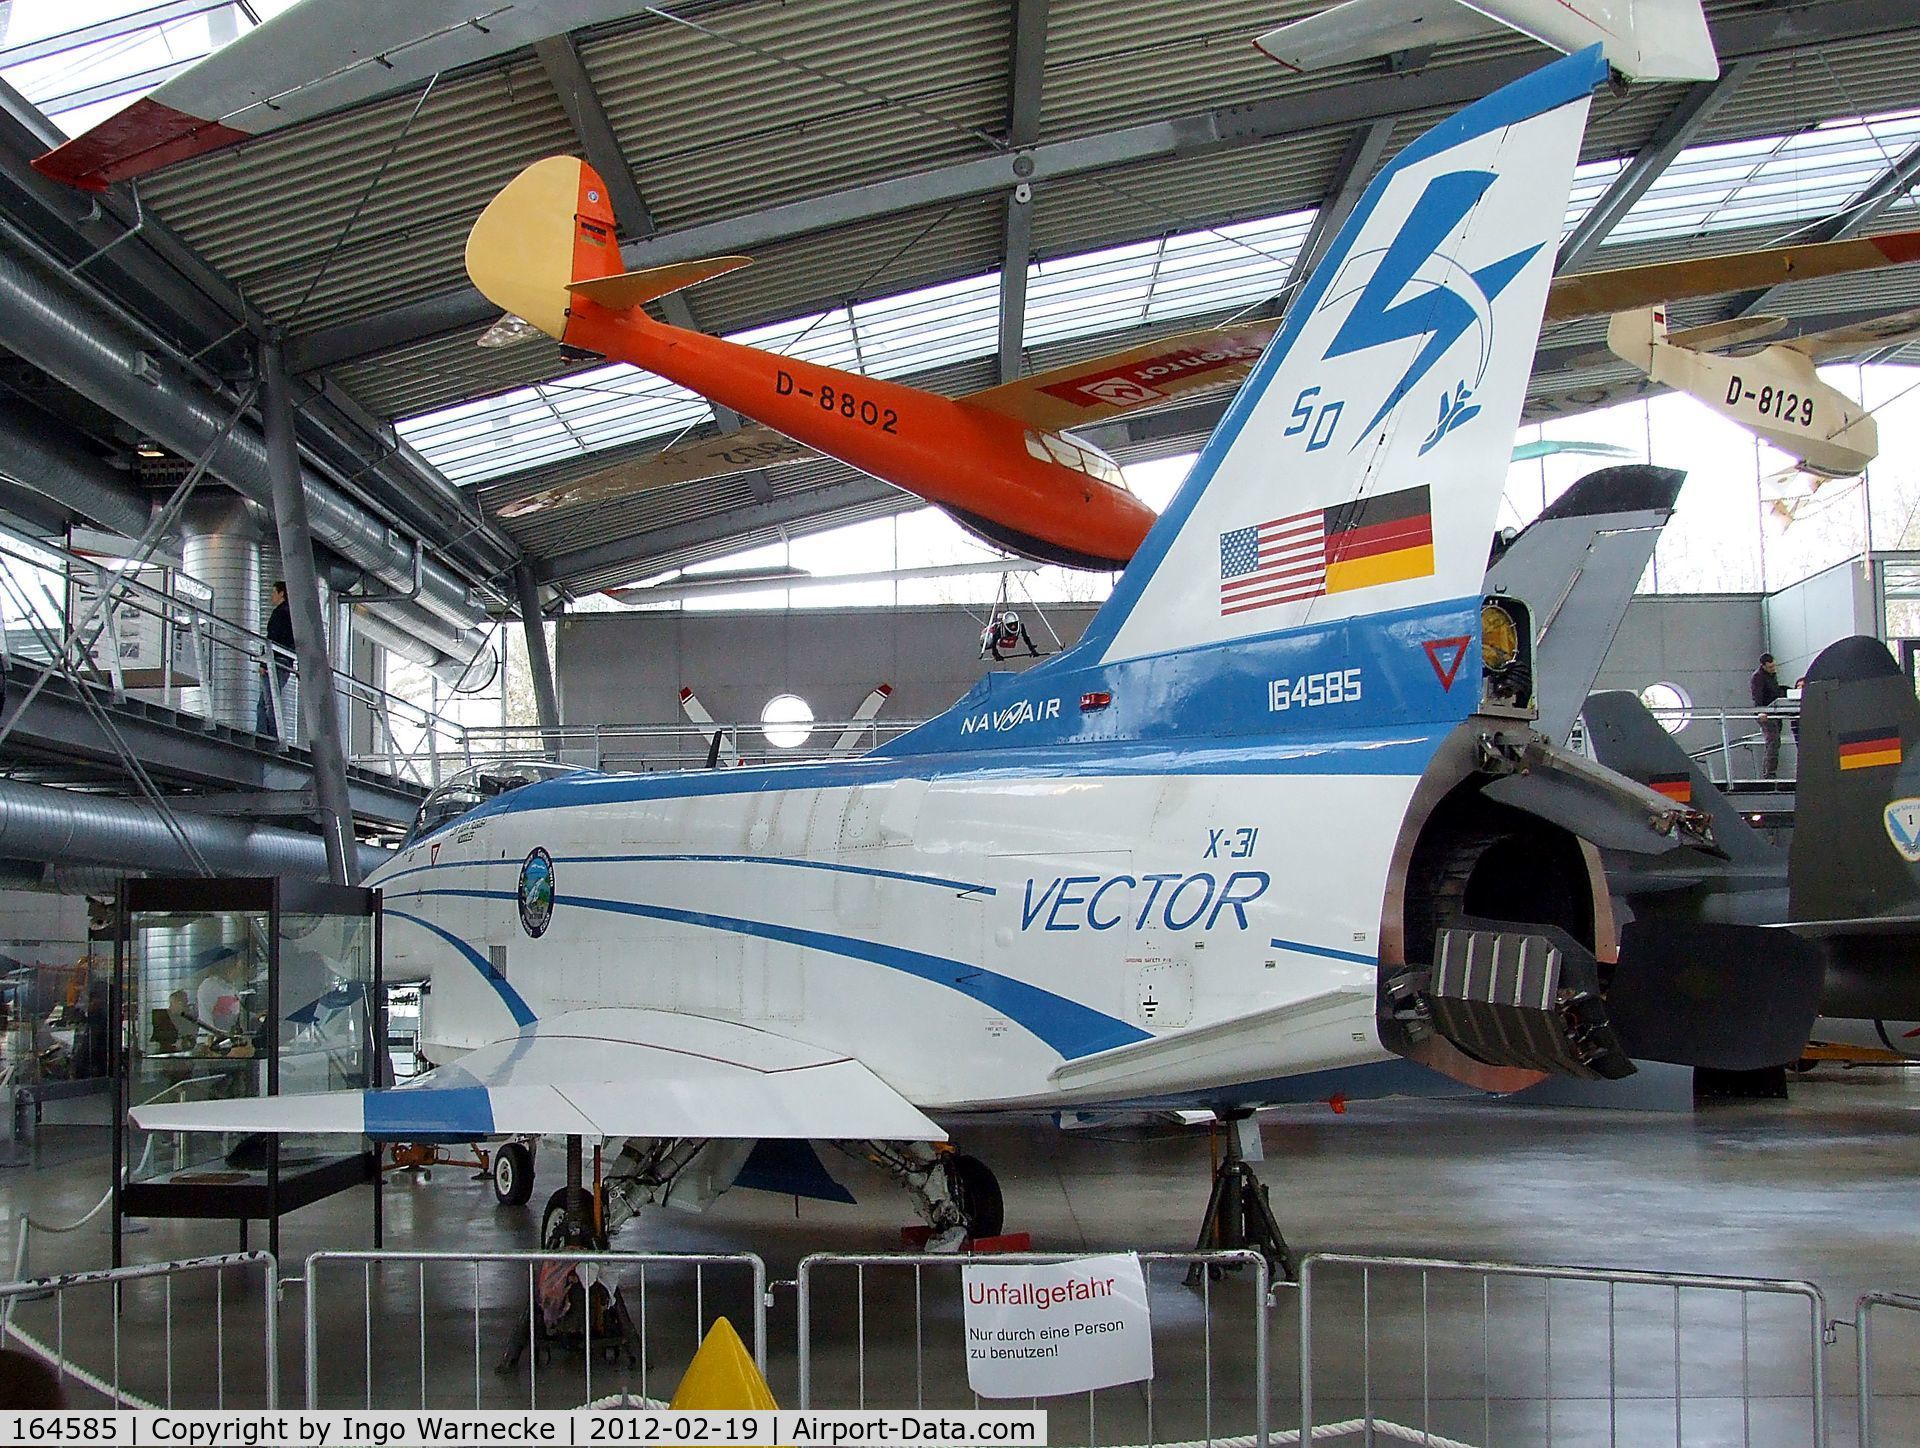 164585, Rockwell-MBB X-31A C/N 2, Rockwell-MBB X-31A Vector at the Deutsches Museum Flugwerft Schleißheim, Oberschleißheim